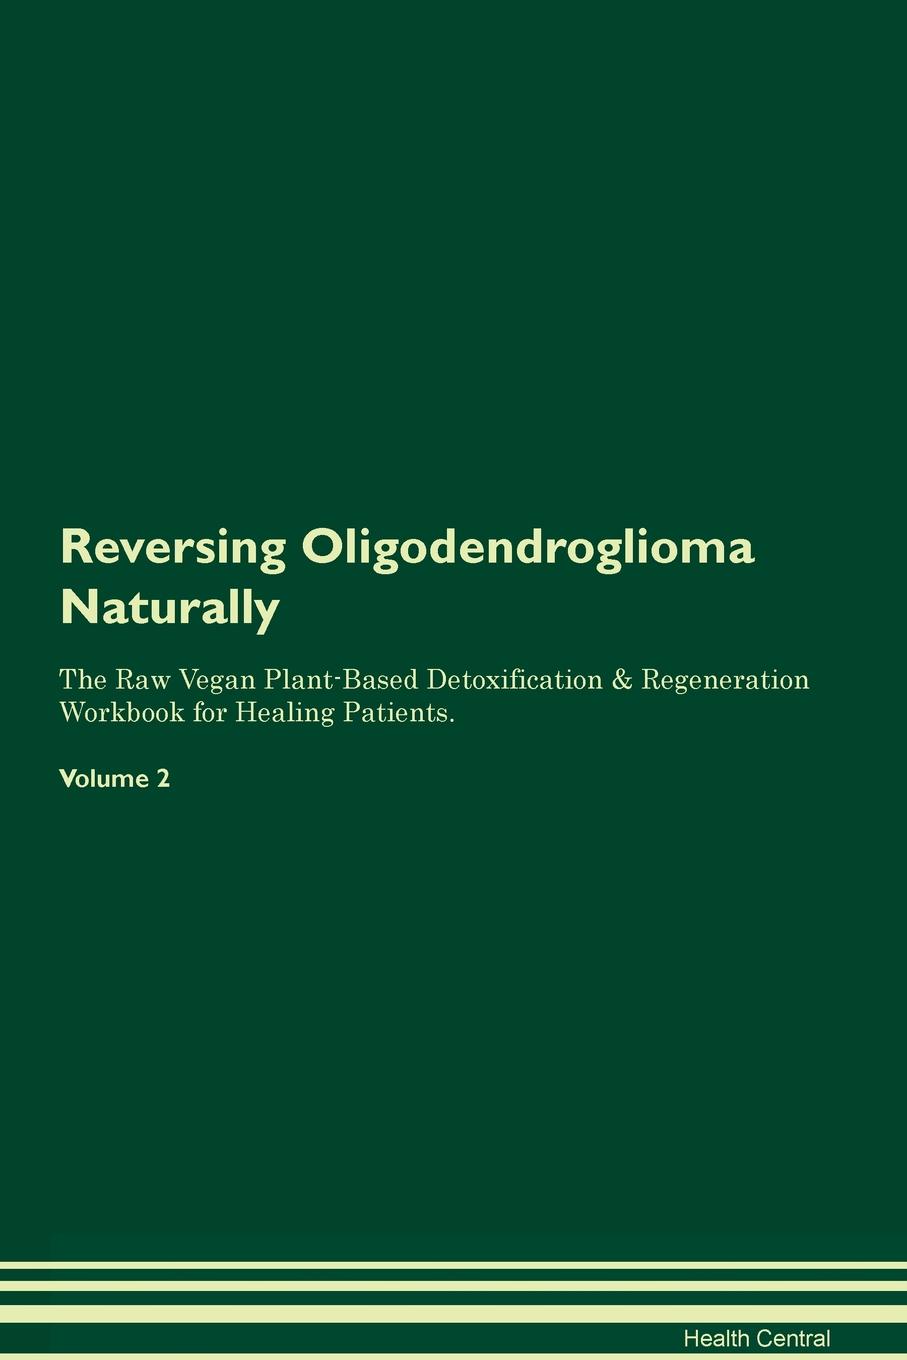 Reversing Oligodendroglioma Naturally The Raw Vegan Plant-Based Detoxification & Regeneration Workbook for Healing Patients. Volume 2